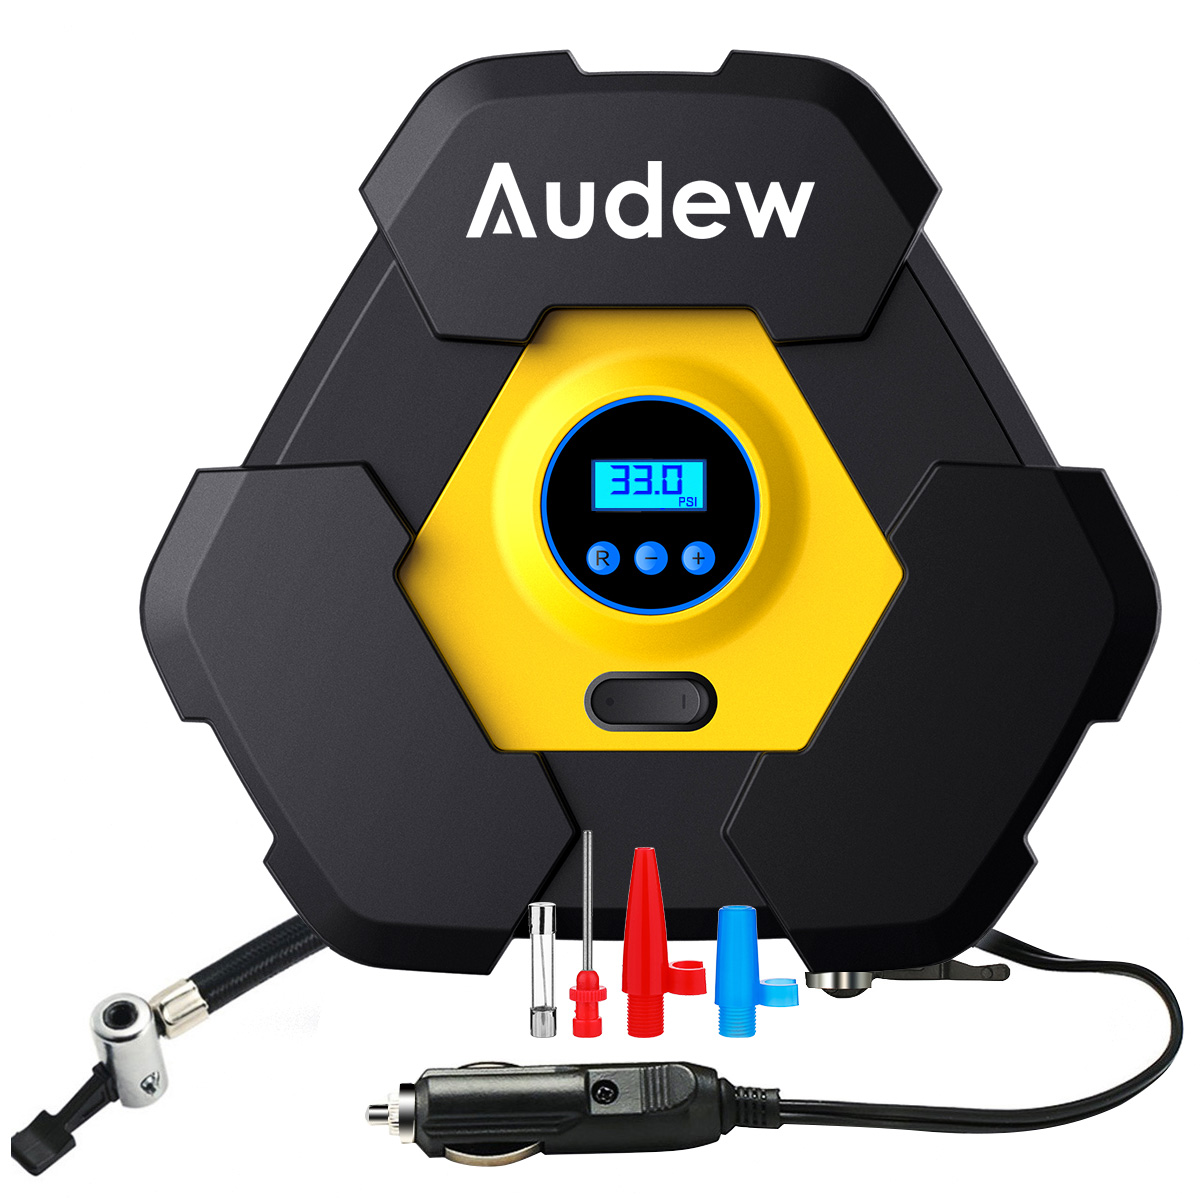 Details about   Audew Portable Air Compressor Tire Inflator with Gauge,Auto Digital Air Pump 